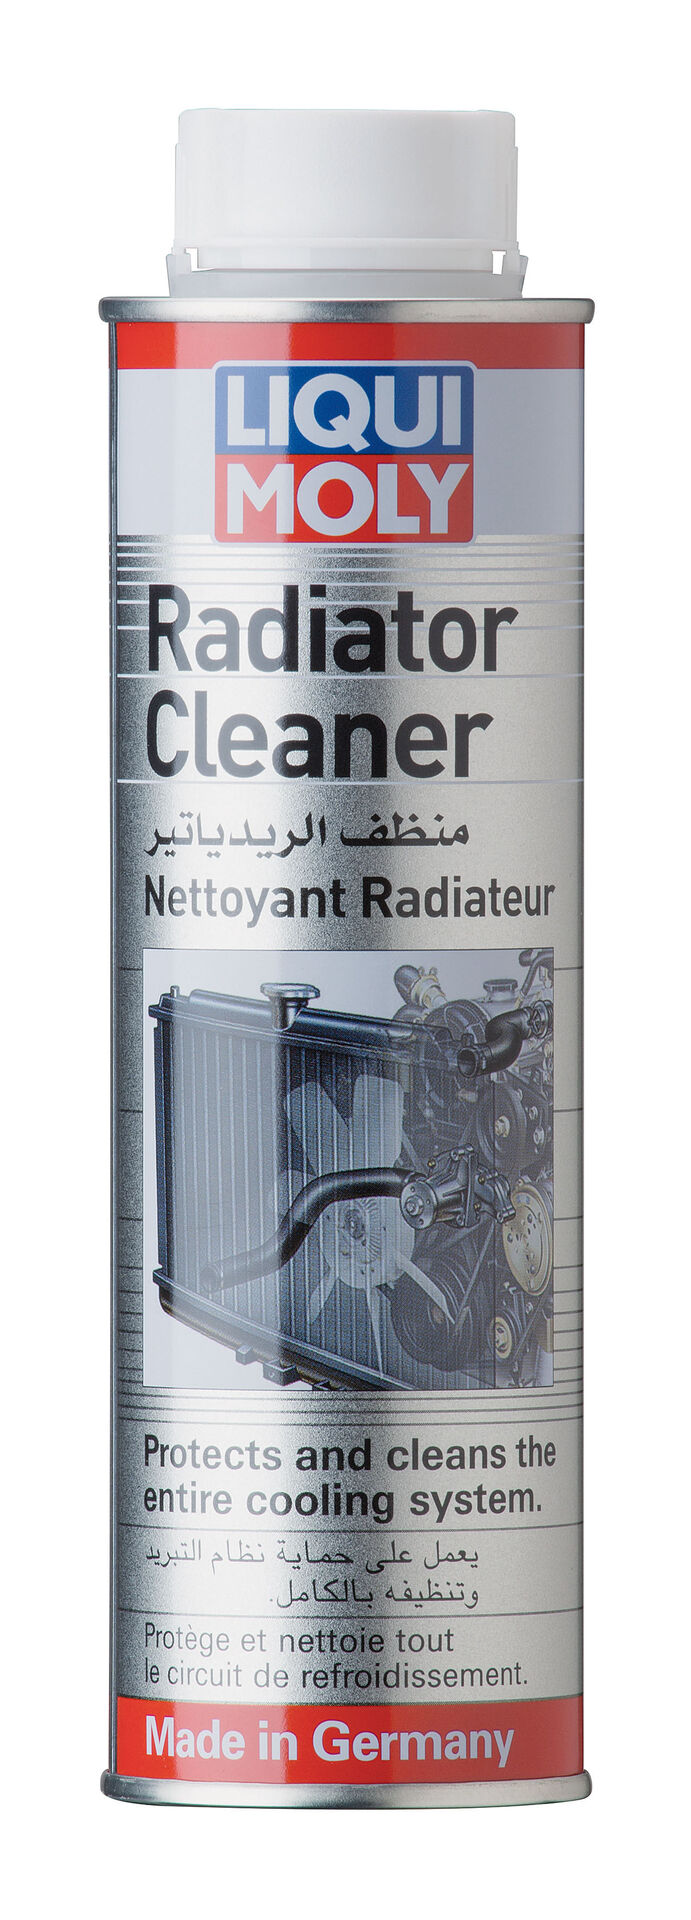 Pro-line Radiator Cleaner